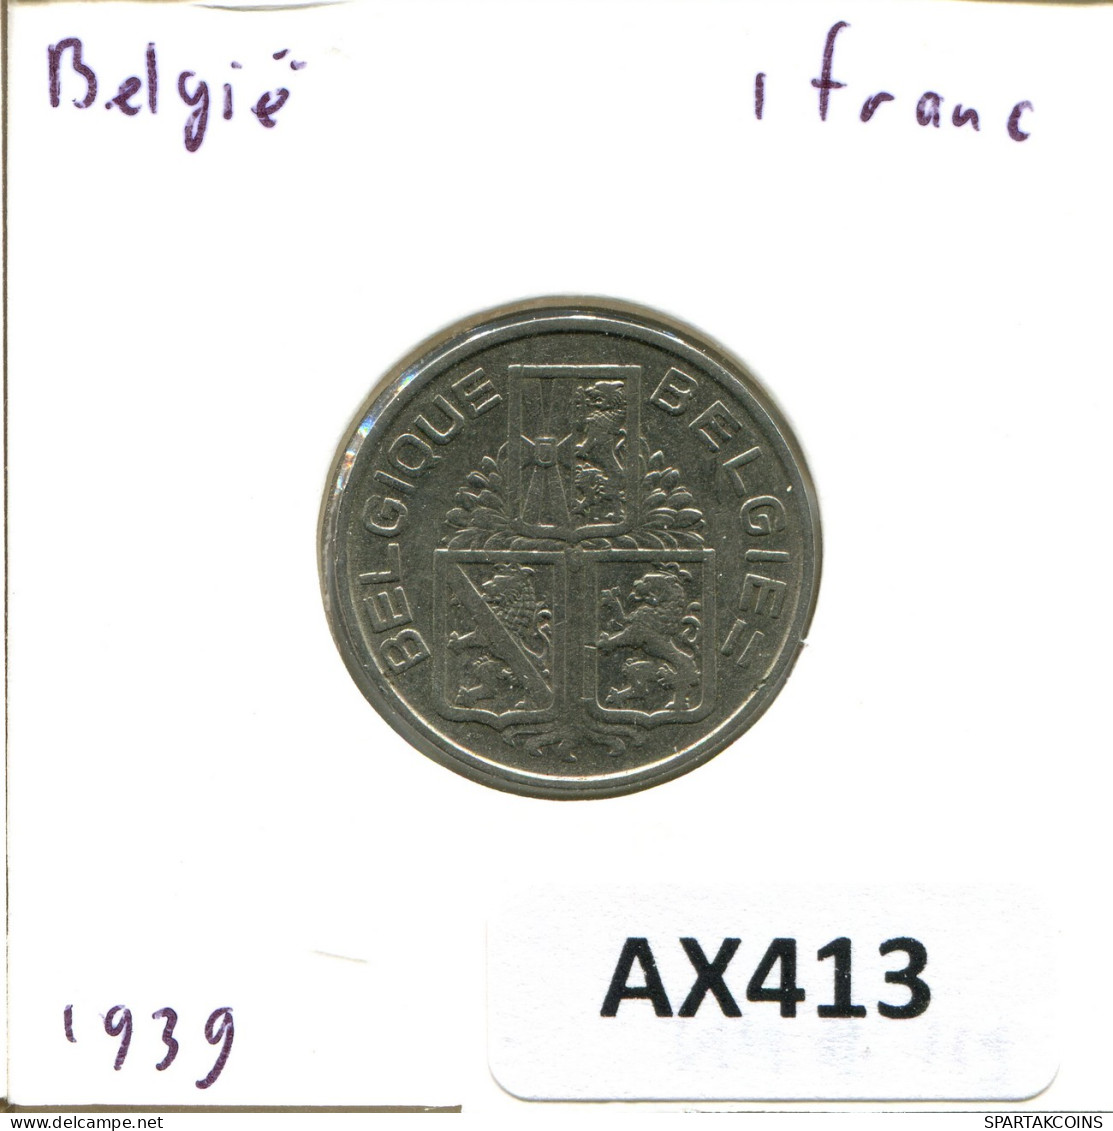 1 FRANC 1939 BELGIQUE BELGIUM Pièce BELGIE-BELGIQUE #AX413.F - 1 Franc